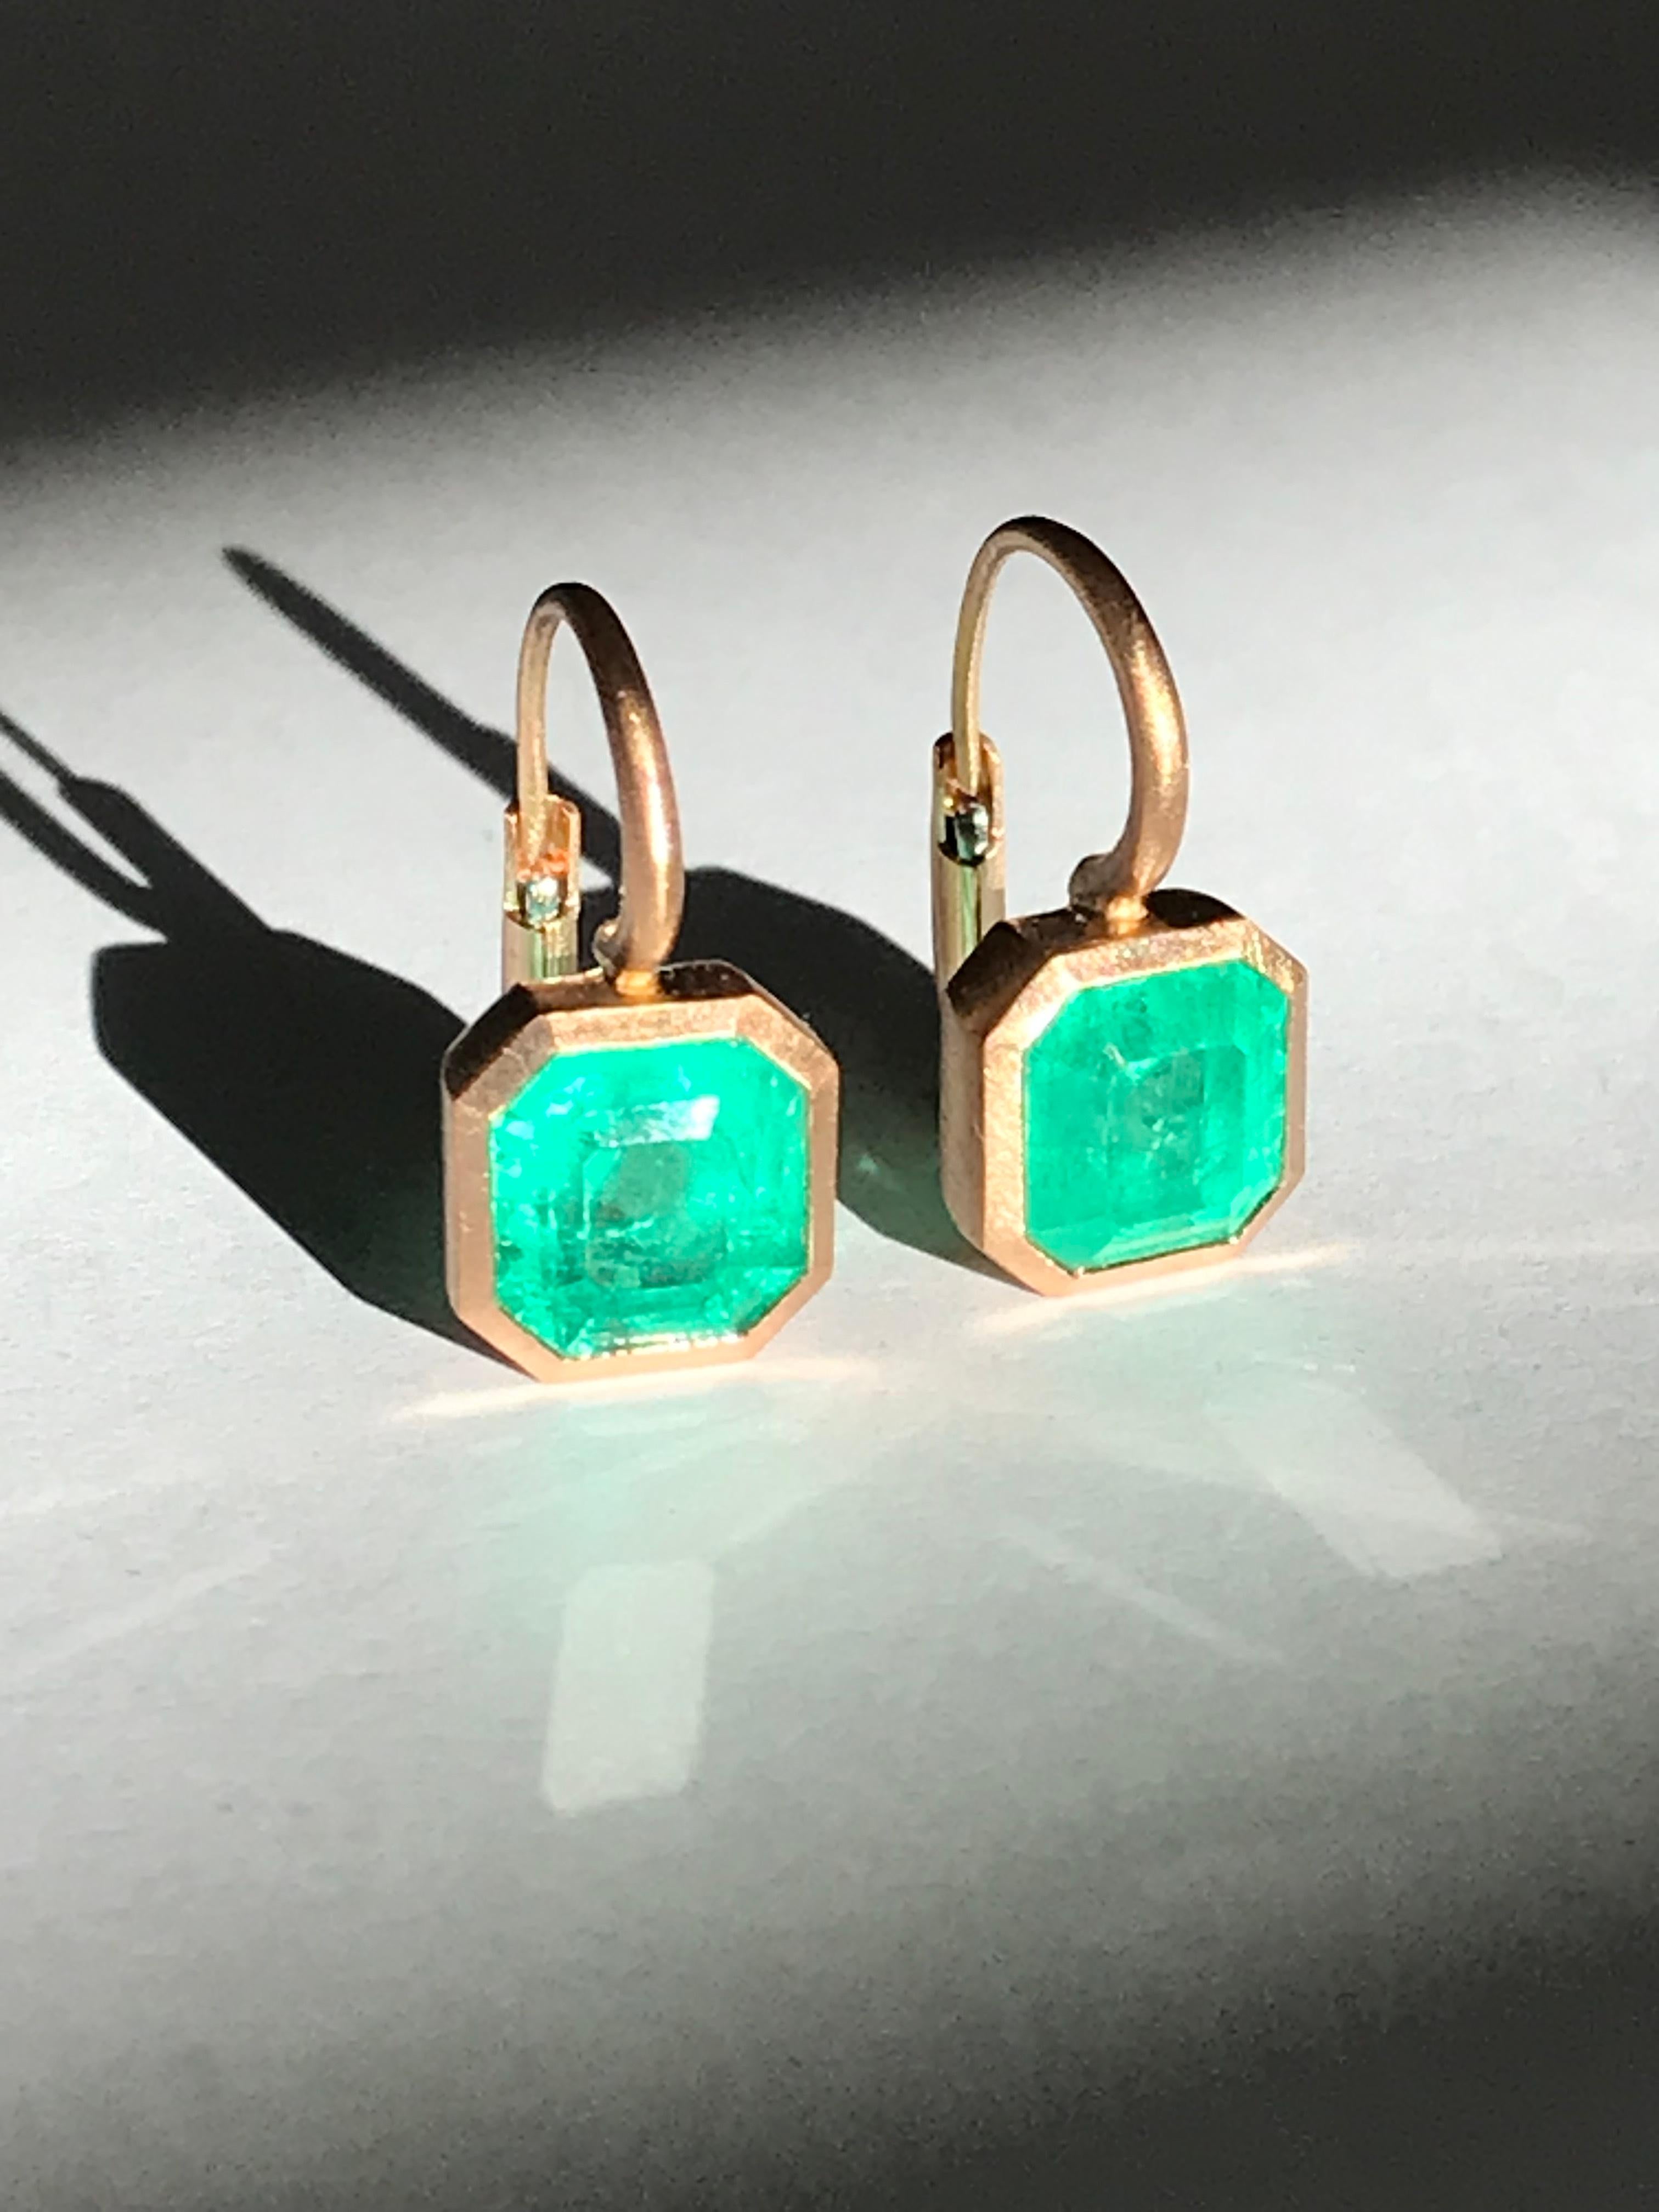 Emerald Cut Dalben 4, 03 Carat Colombian Emerald Rose Gold Earrings